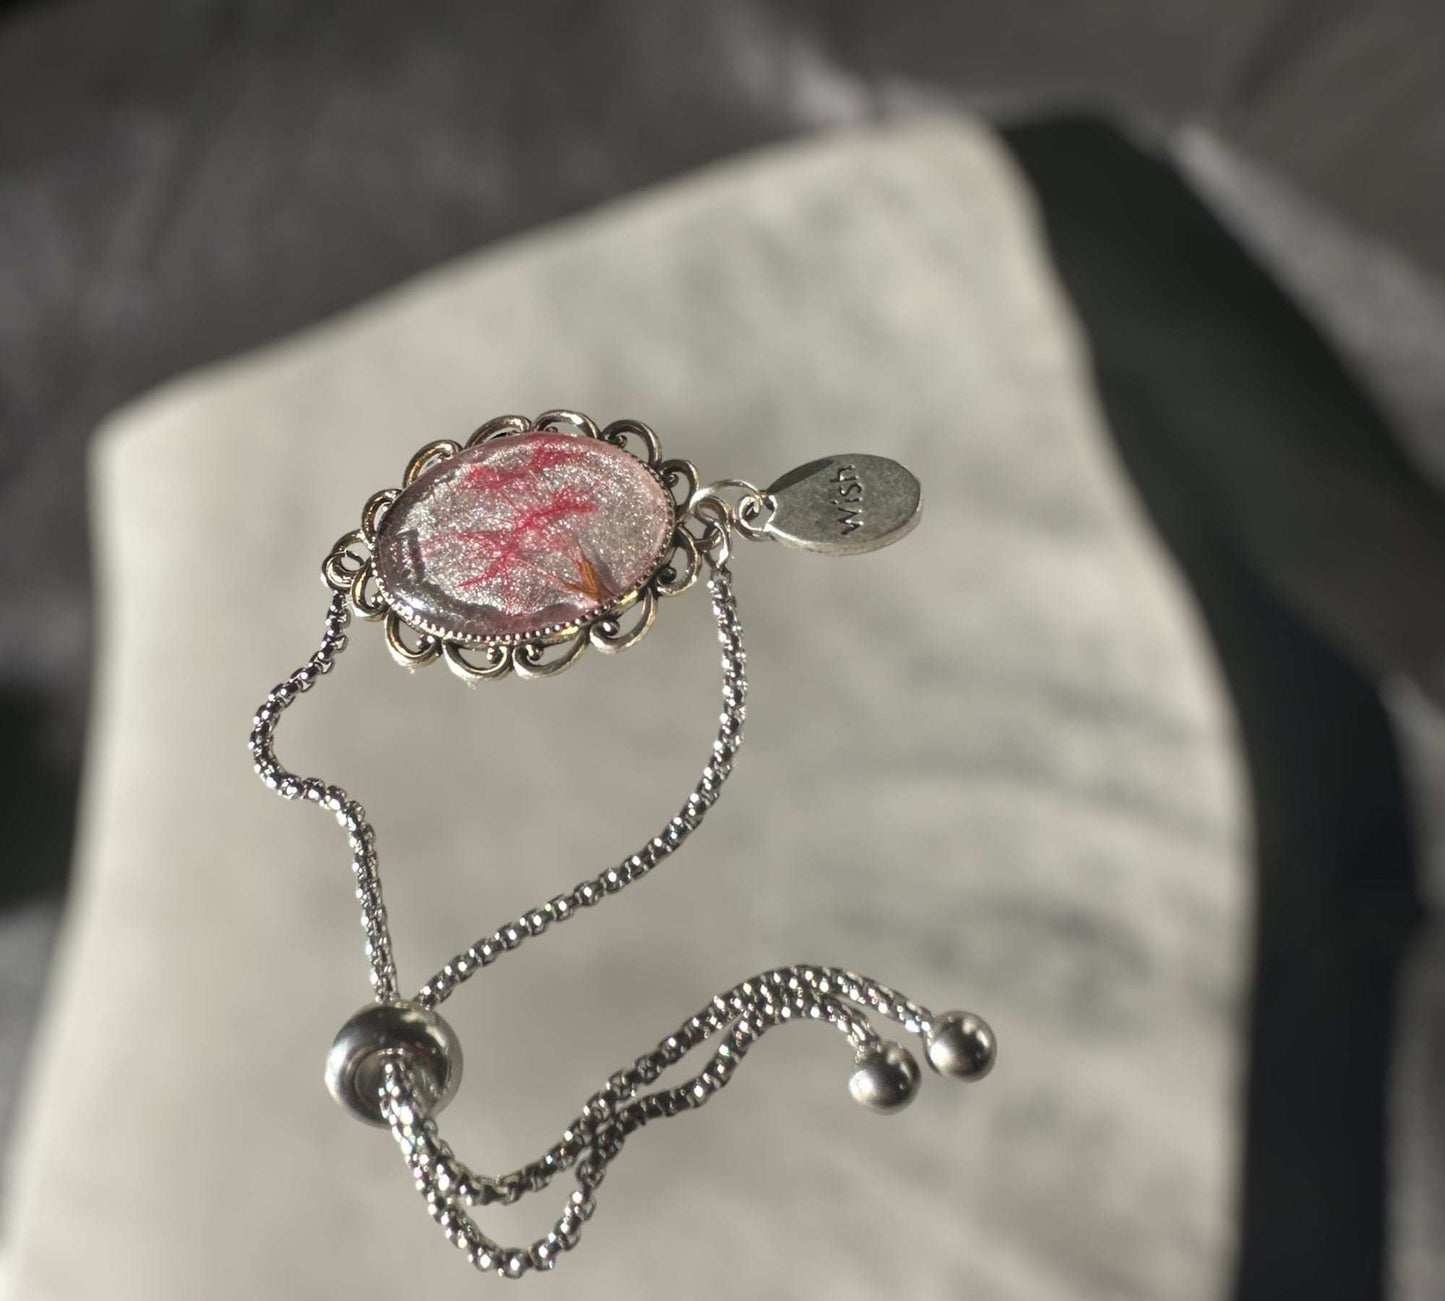 Fairy Wishes Bracelet -Wish Charm Bracelet Handmade with Tinted Wishes